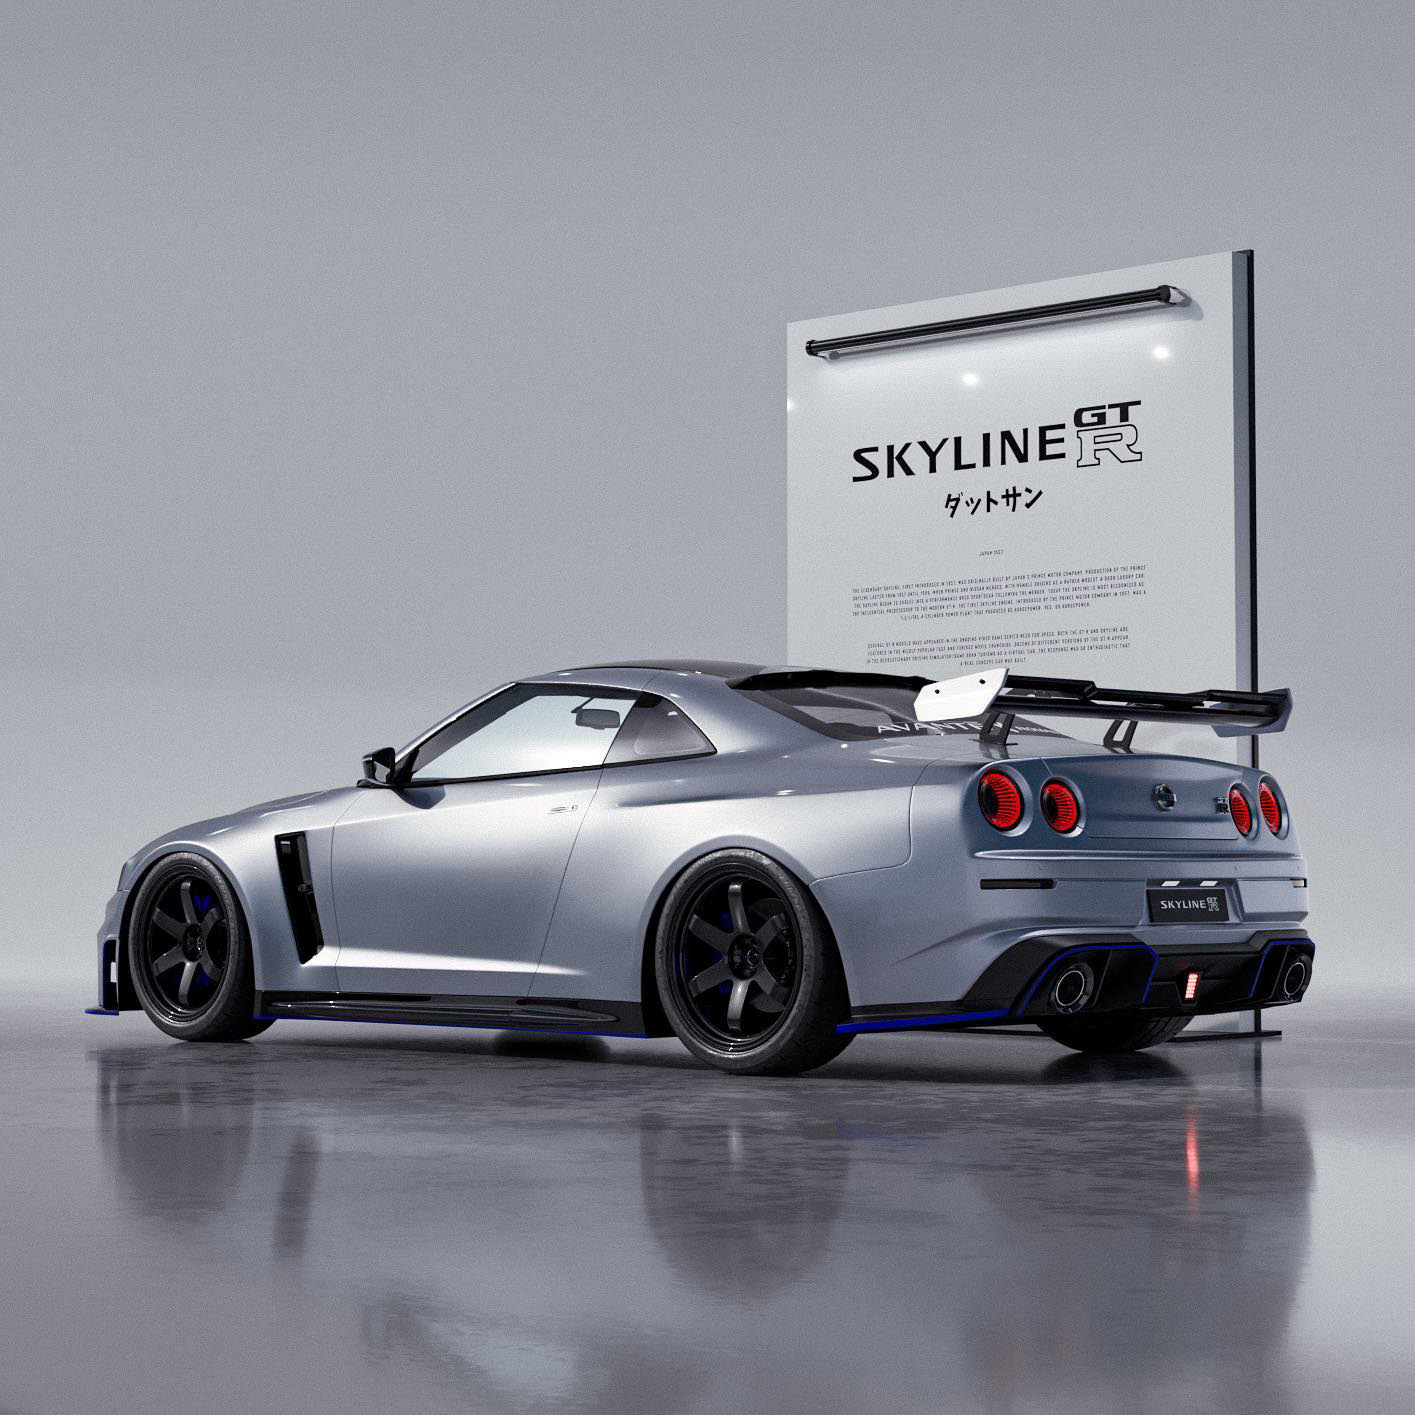 2023 R36 Nissan Skyline GT-R concept by Roman Miah and Avante Design-4 -  Paul Tan's Automotive News